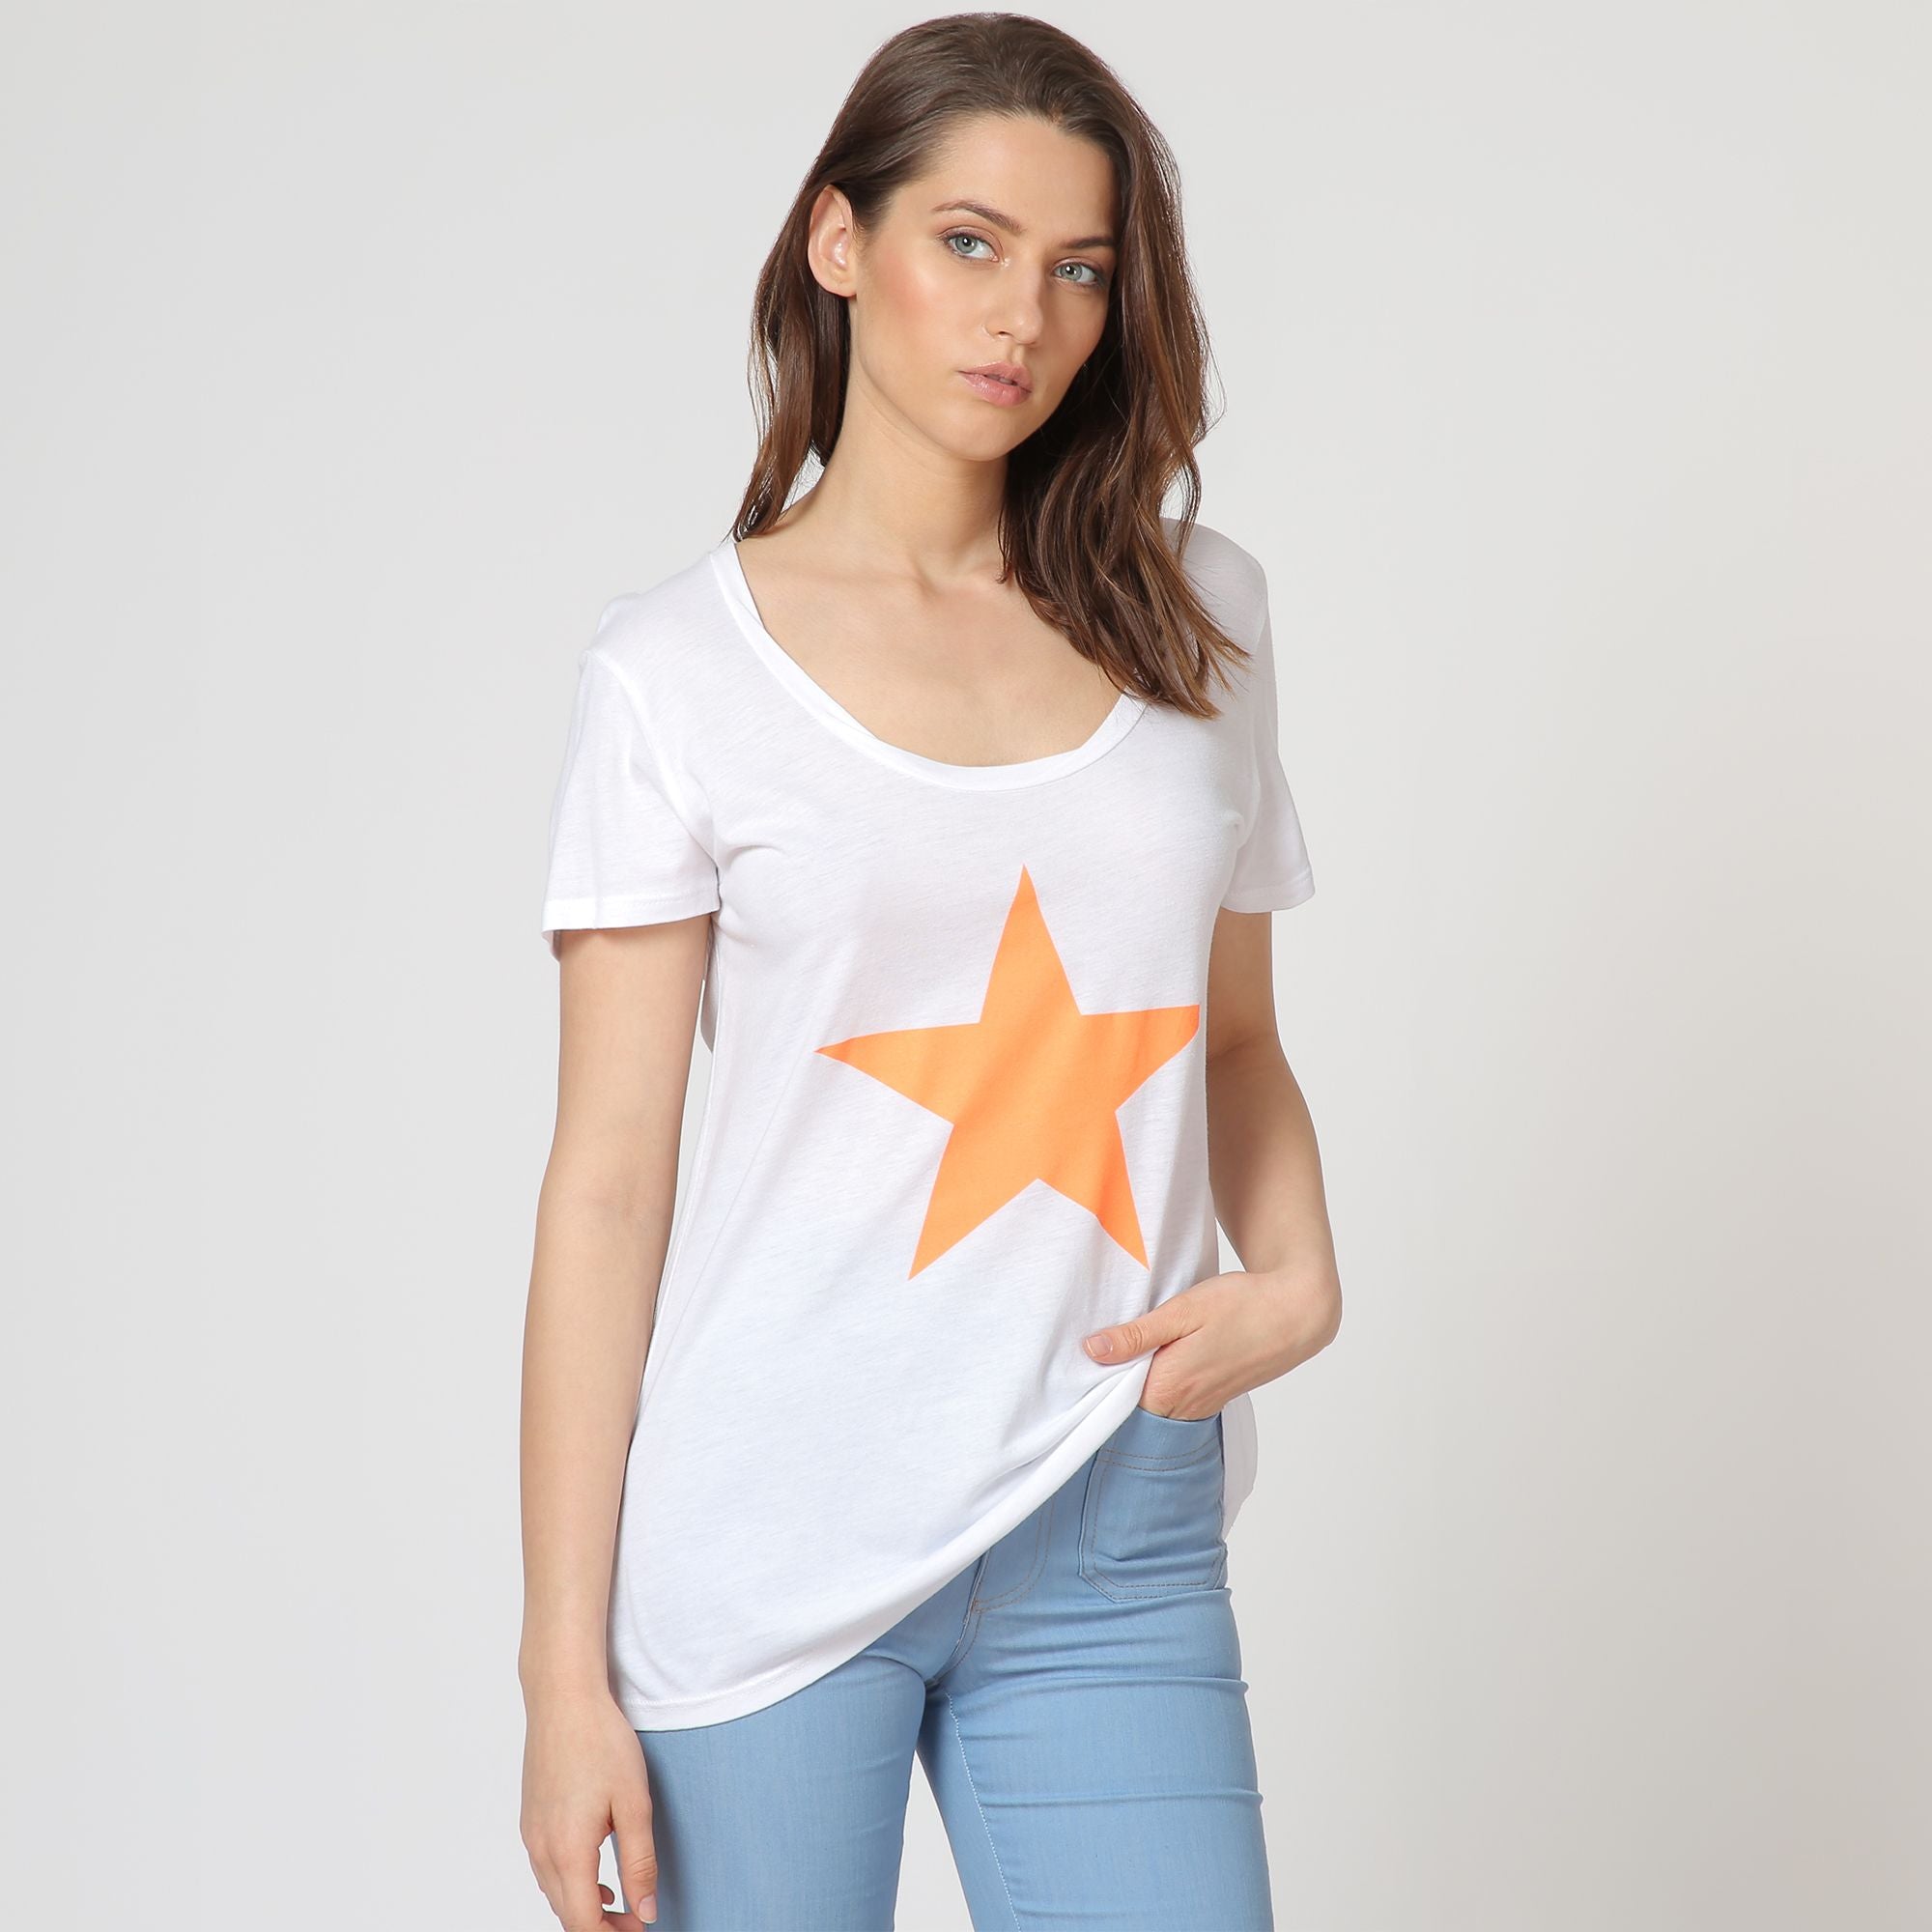 Camiseta manga corta blanca estrella naranja